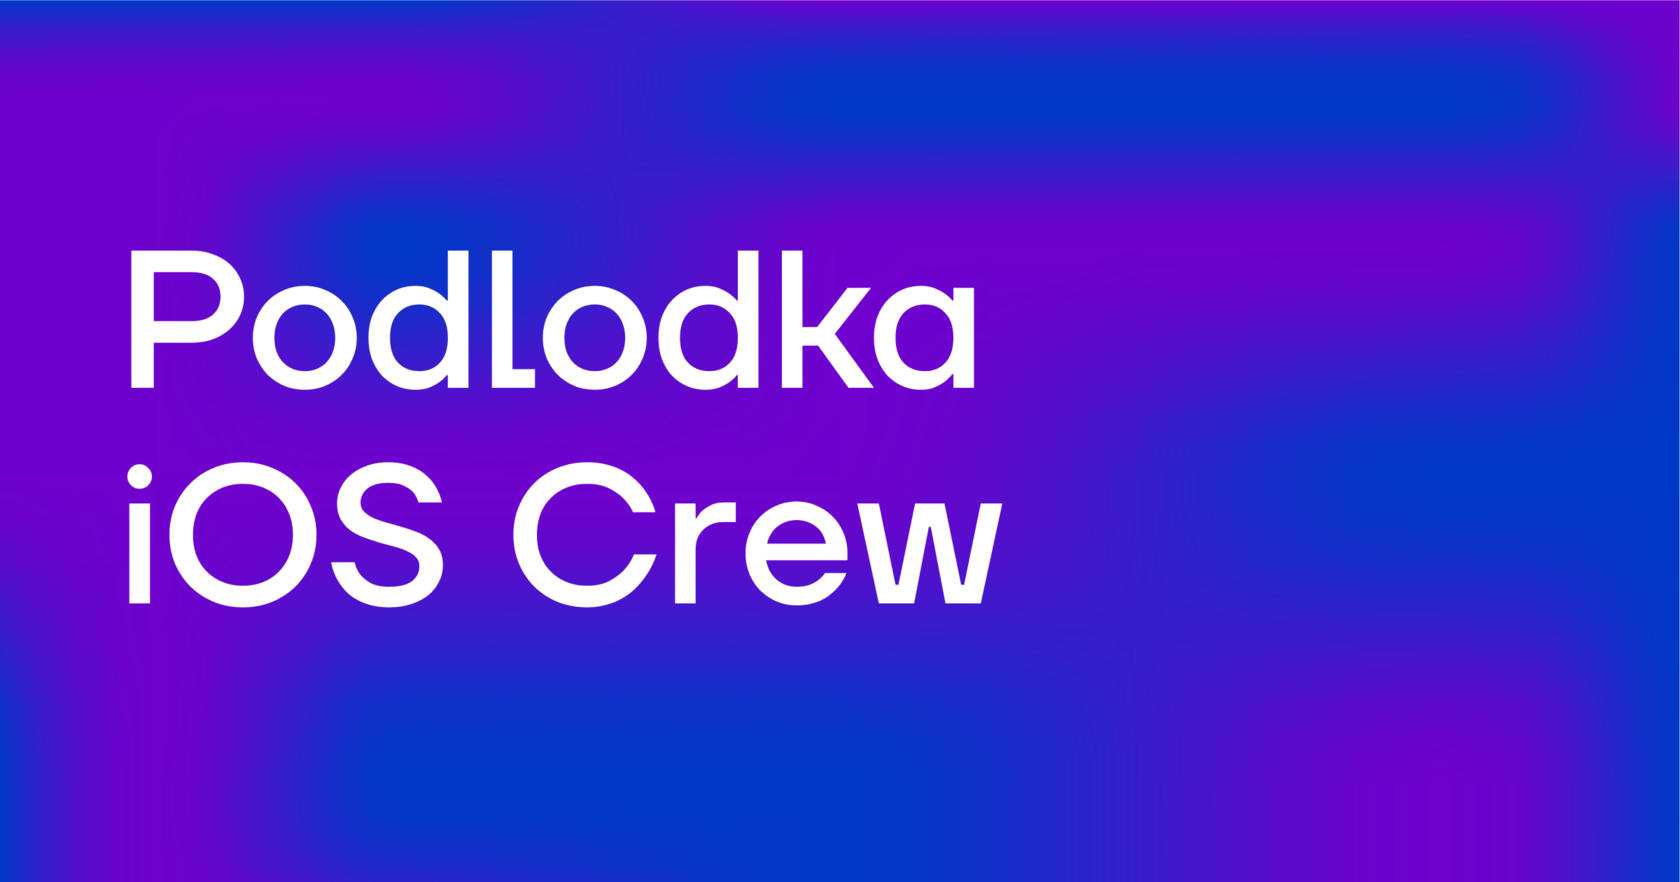 Онлайн-конференция Podlodka iOS Crew, сезон #6